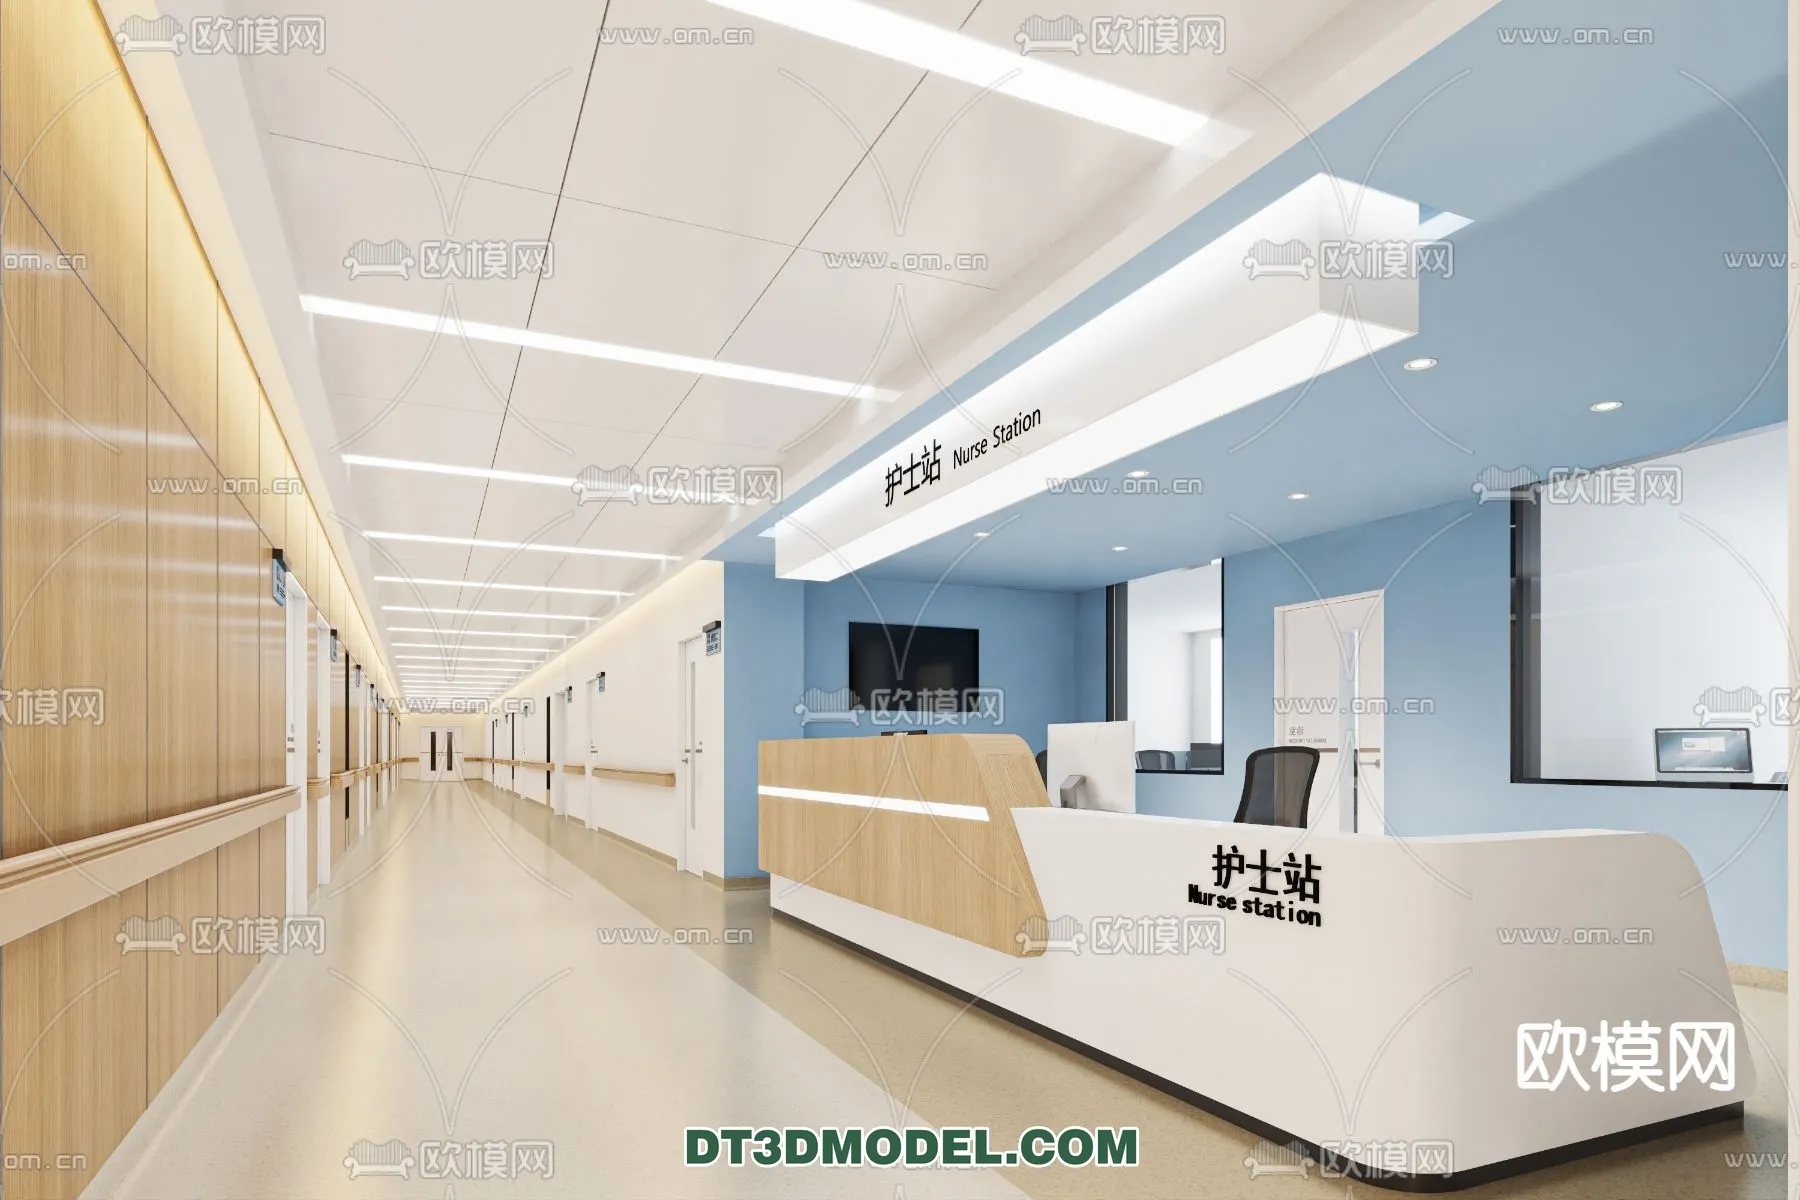 HOSPITAL 3D SCENES – MODERN – 0138